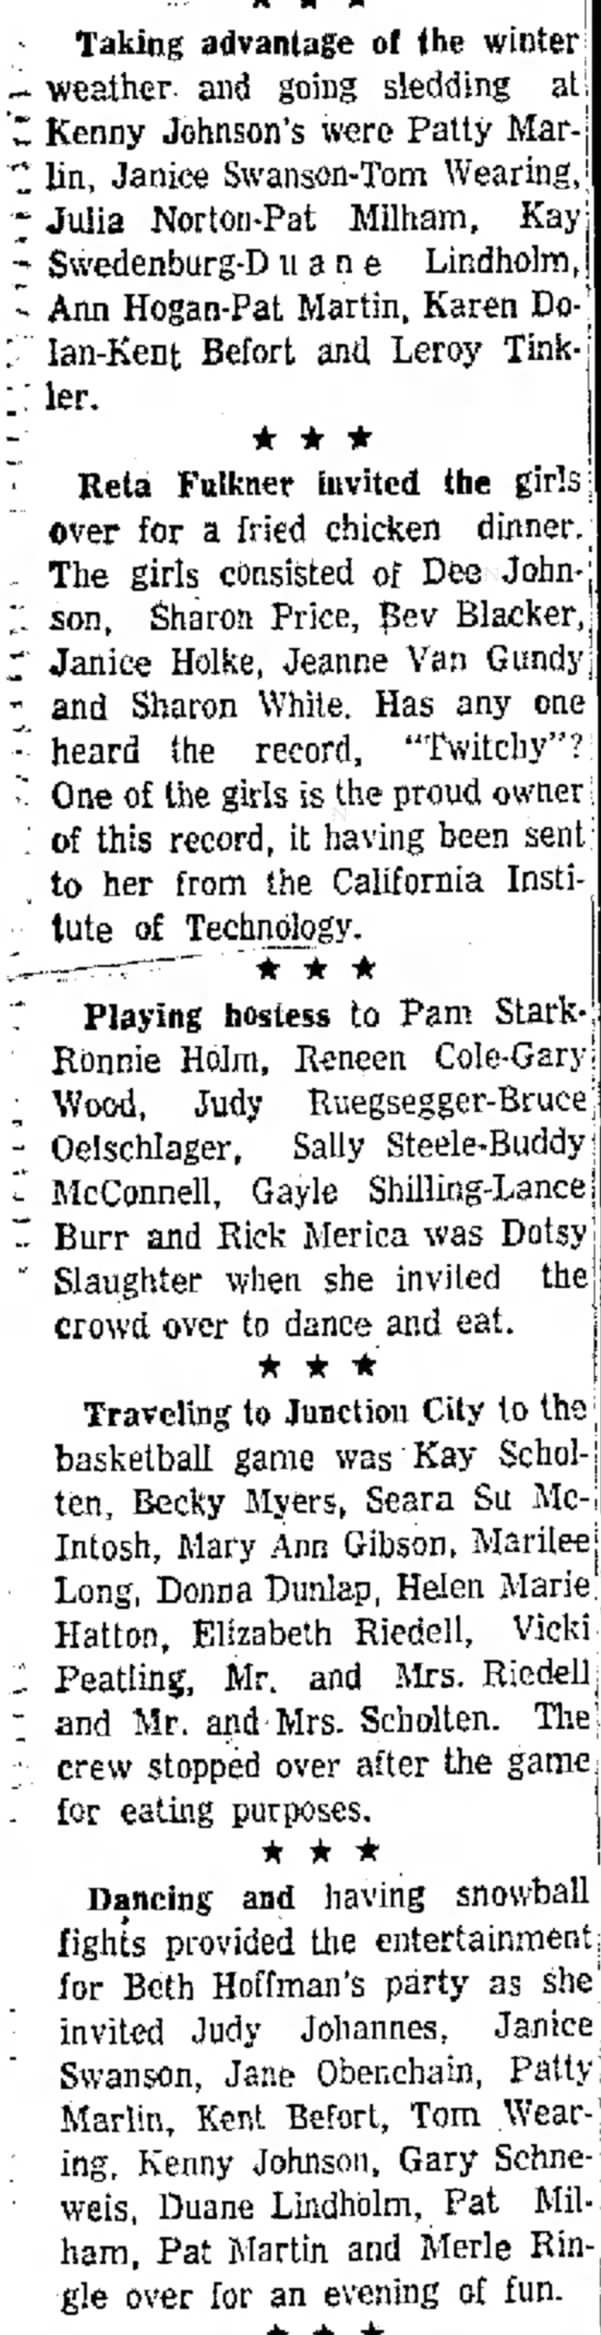 Teen Talk, The Salina Journal ( Salina Kansas) 5 Feb 1958